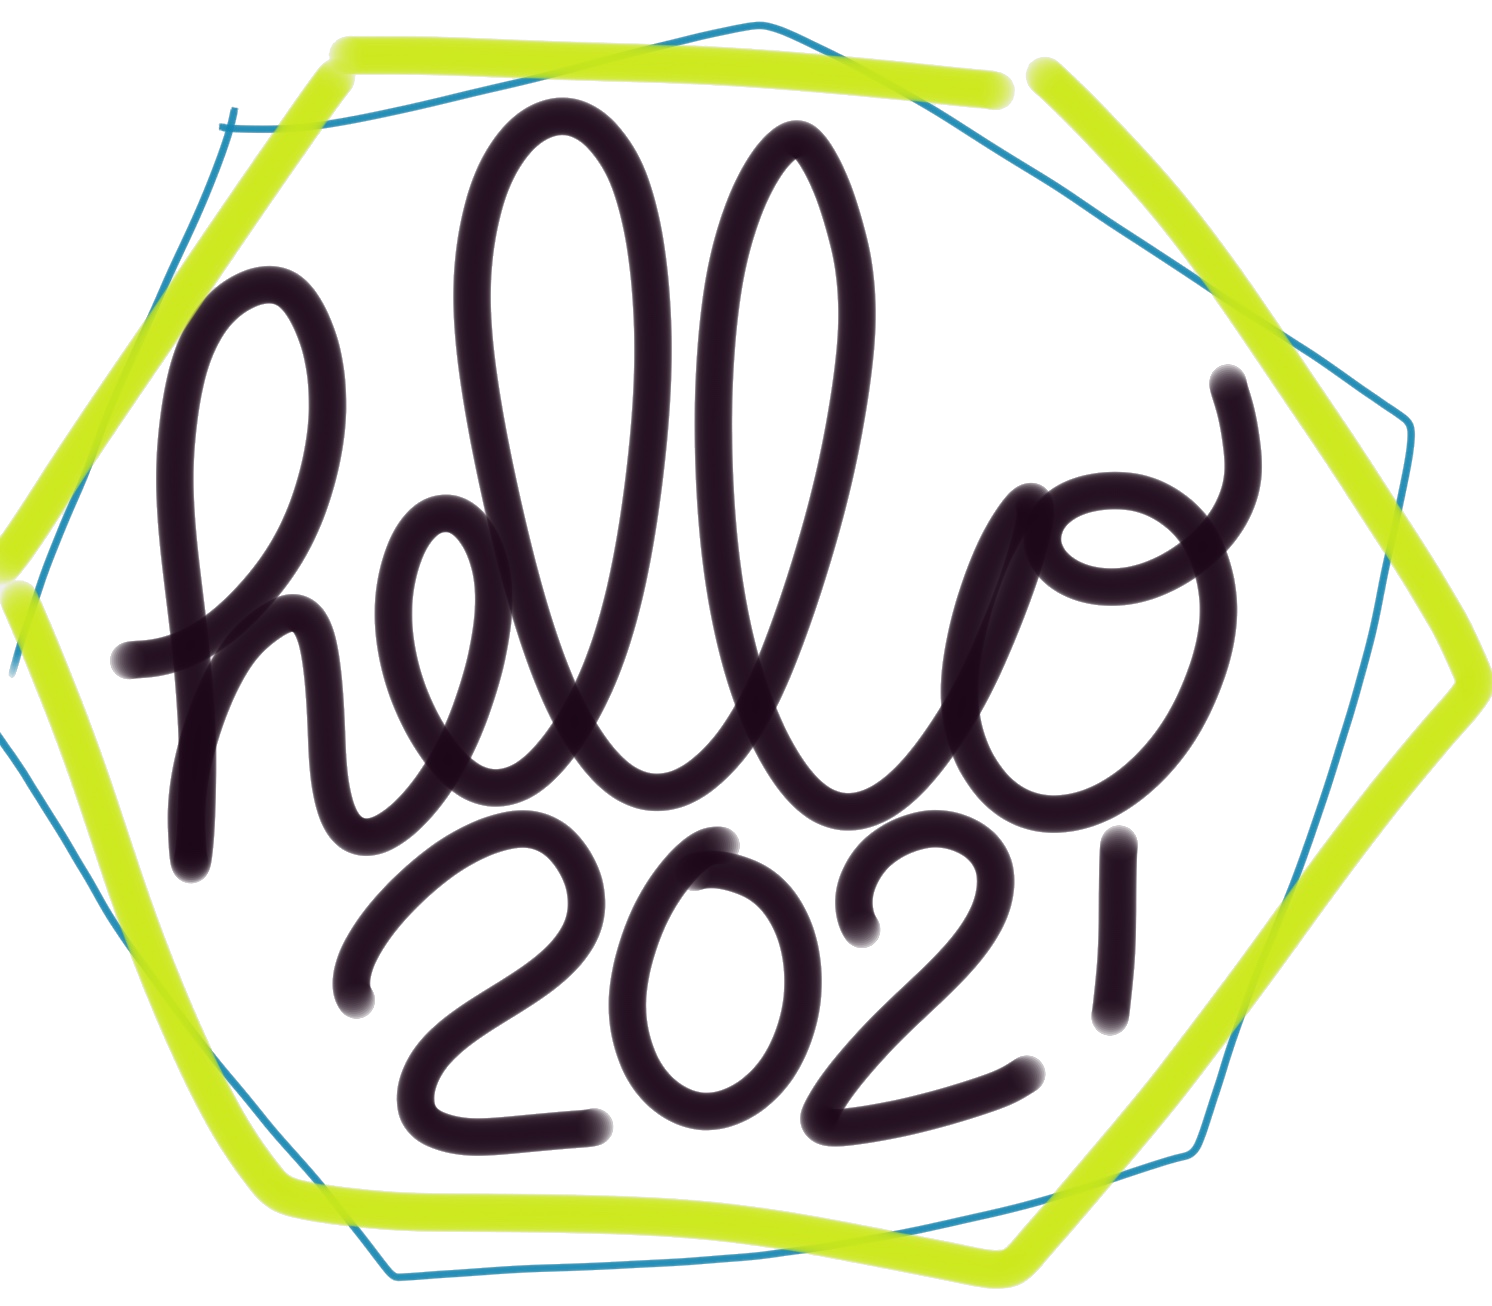 Привет 2021. Hello 2021. Цензор арт 2021 Ажа. Camellia hello 2021.